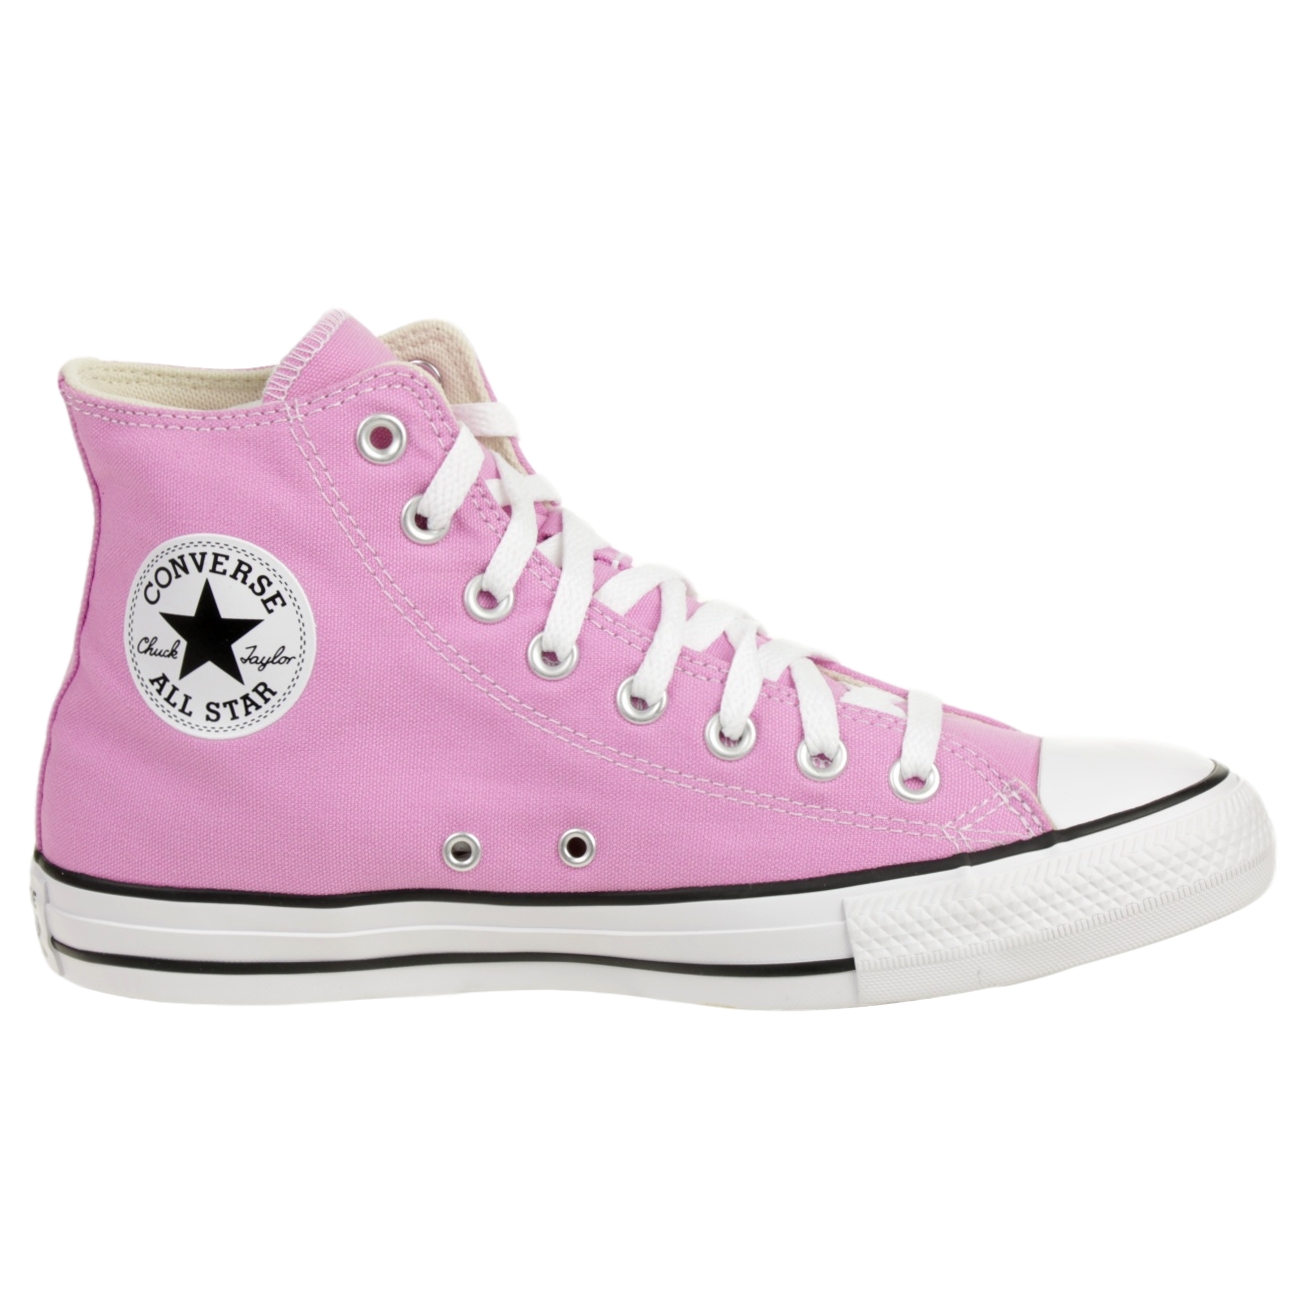 Converse CTAS Hi Top Unisex Chucks Sneaker 166704C Pink